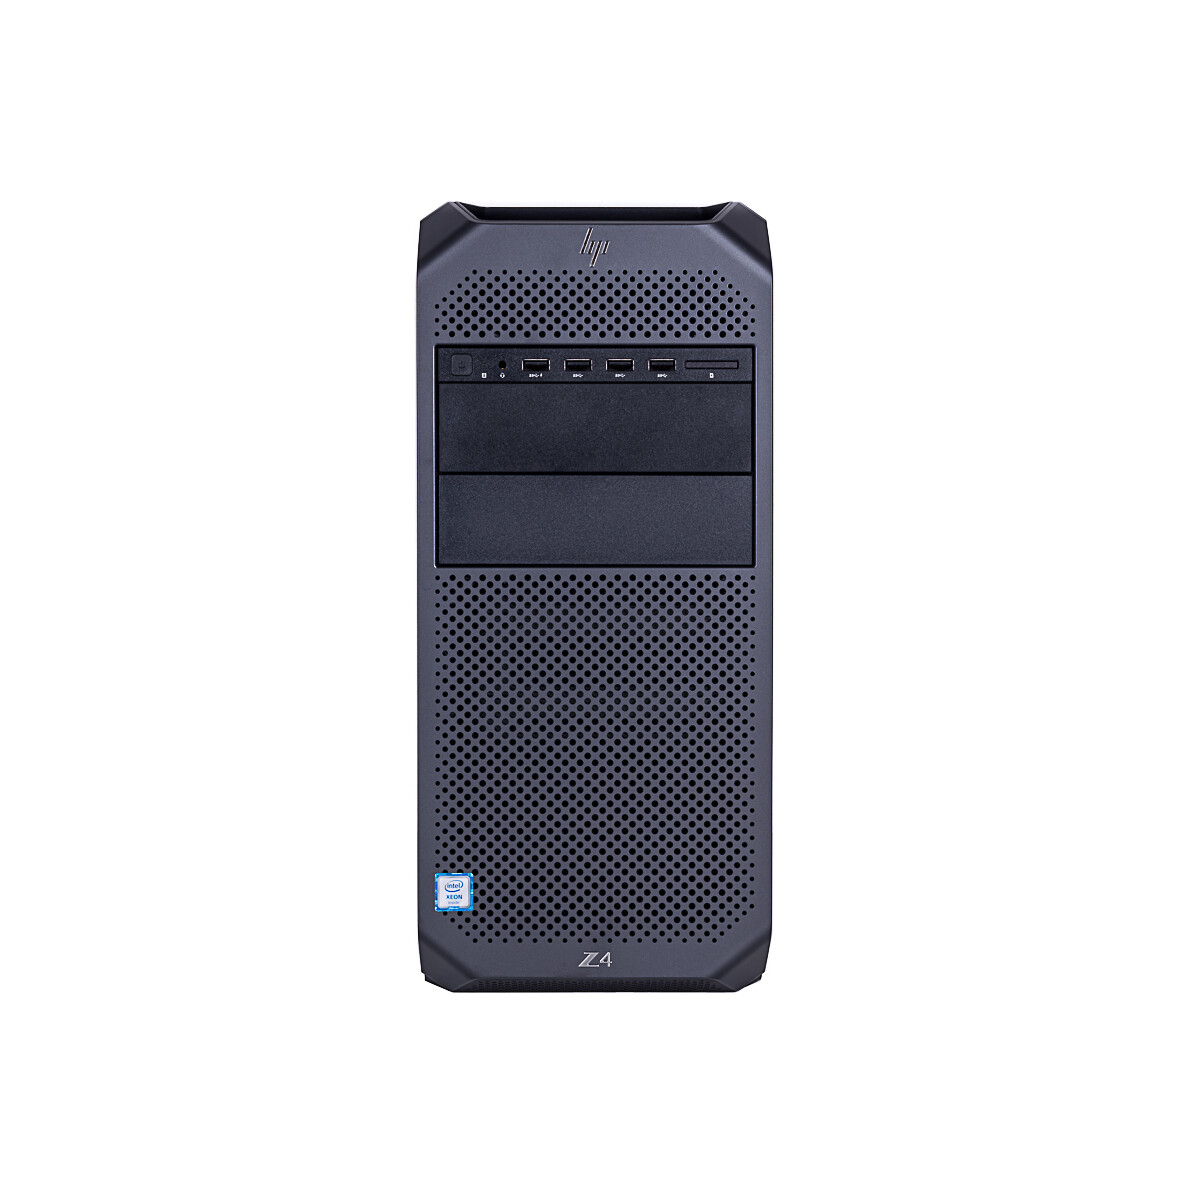 HP Z4 G4 Business Workstation 6-Core Intel Xeon W-2133, max. 3.90GHz, 32GB DDR4, 2 x 512GB M.2 NVME SSD (NEW), NVIDIA Geforce RTX 3060, 12GB (NEW), WIN 10 Pro 